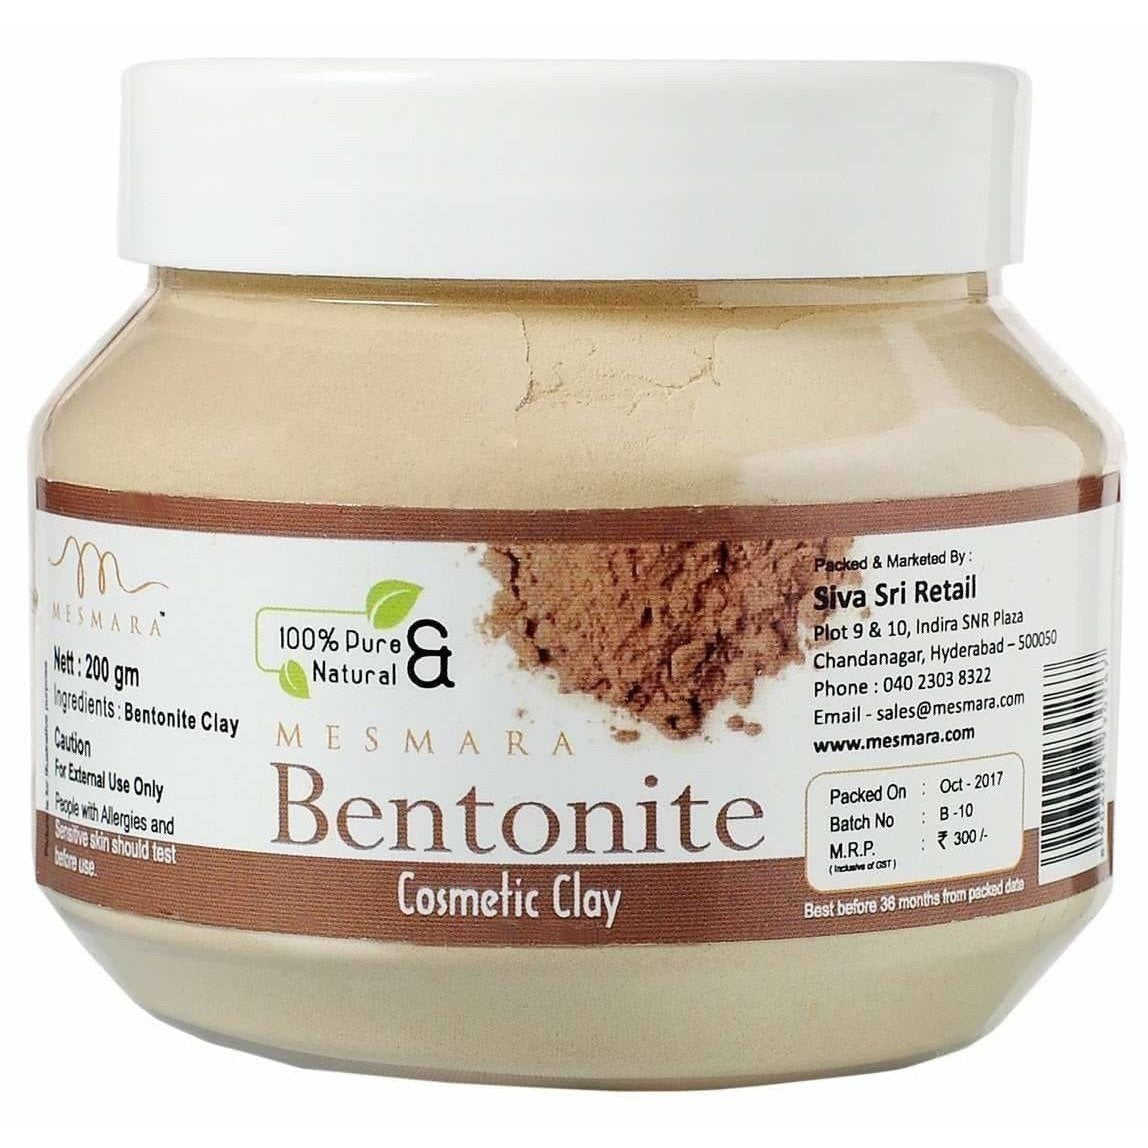 Mesmara Bentonite Cosmetic Clay - usa canada australia